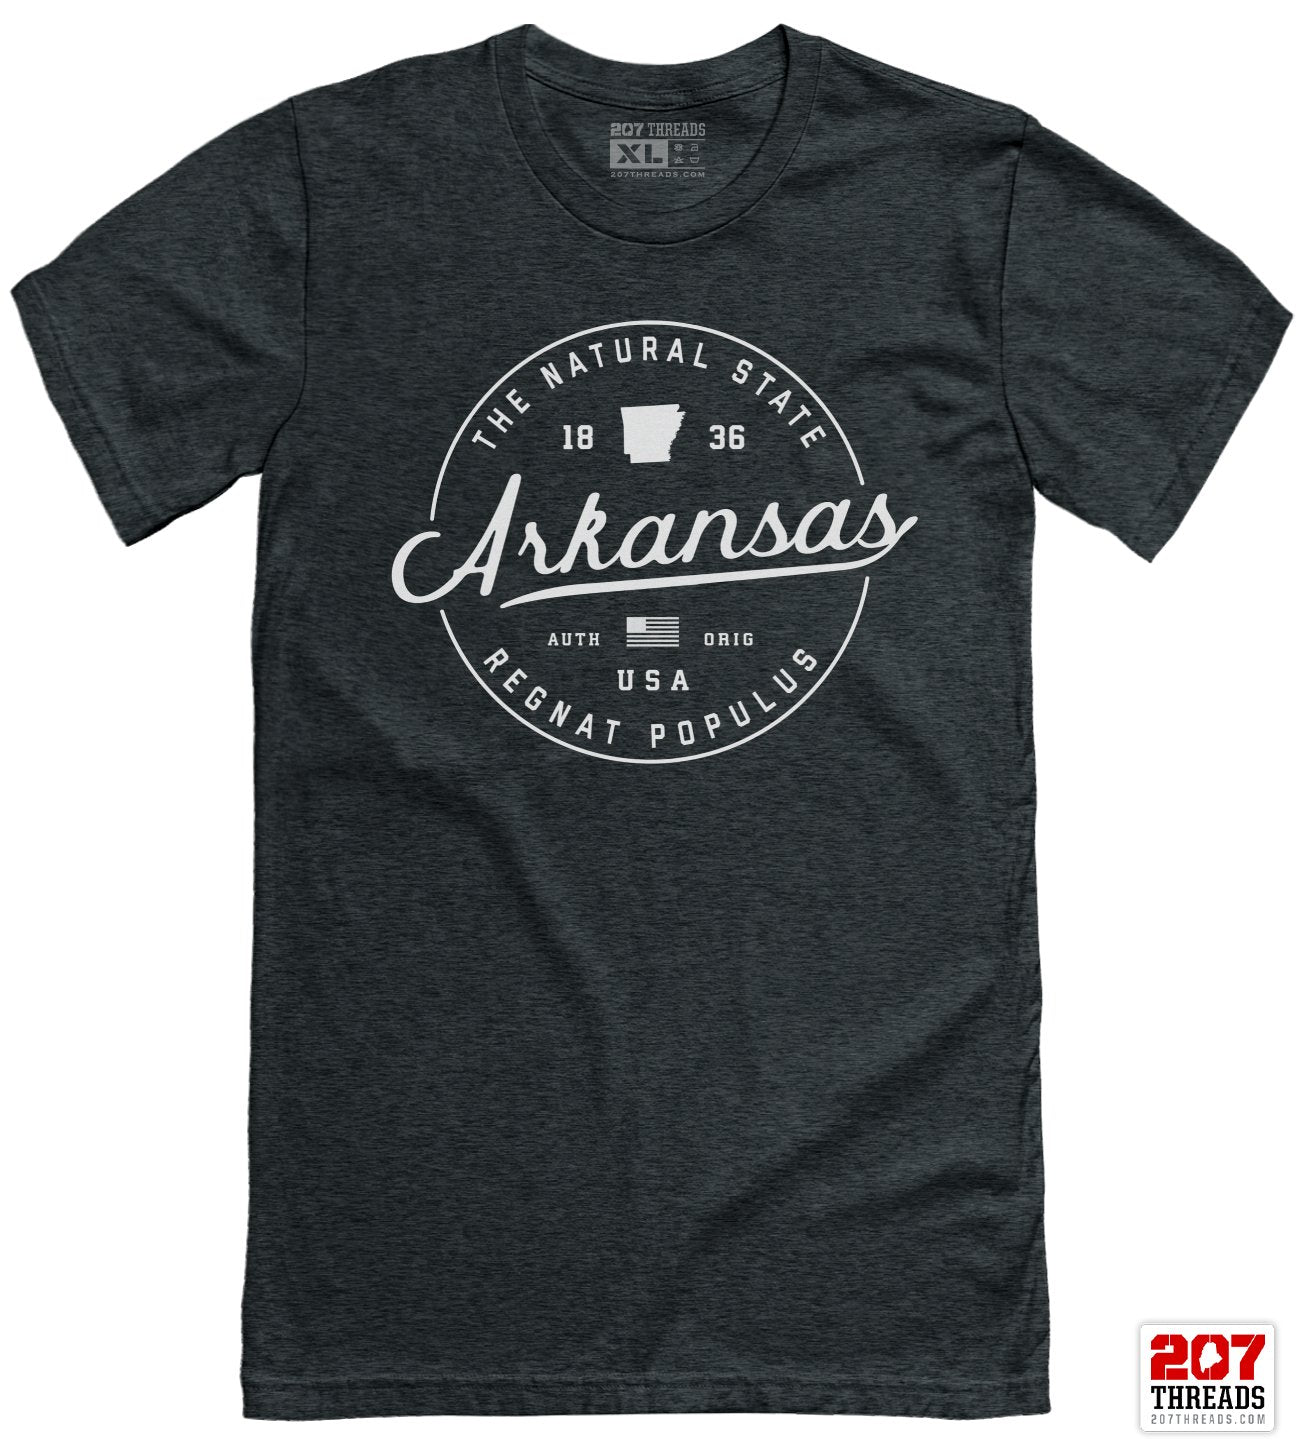 State of Arkansas T-Shirt - Soft Arkansas Tee